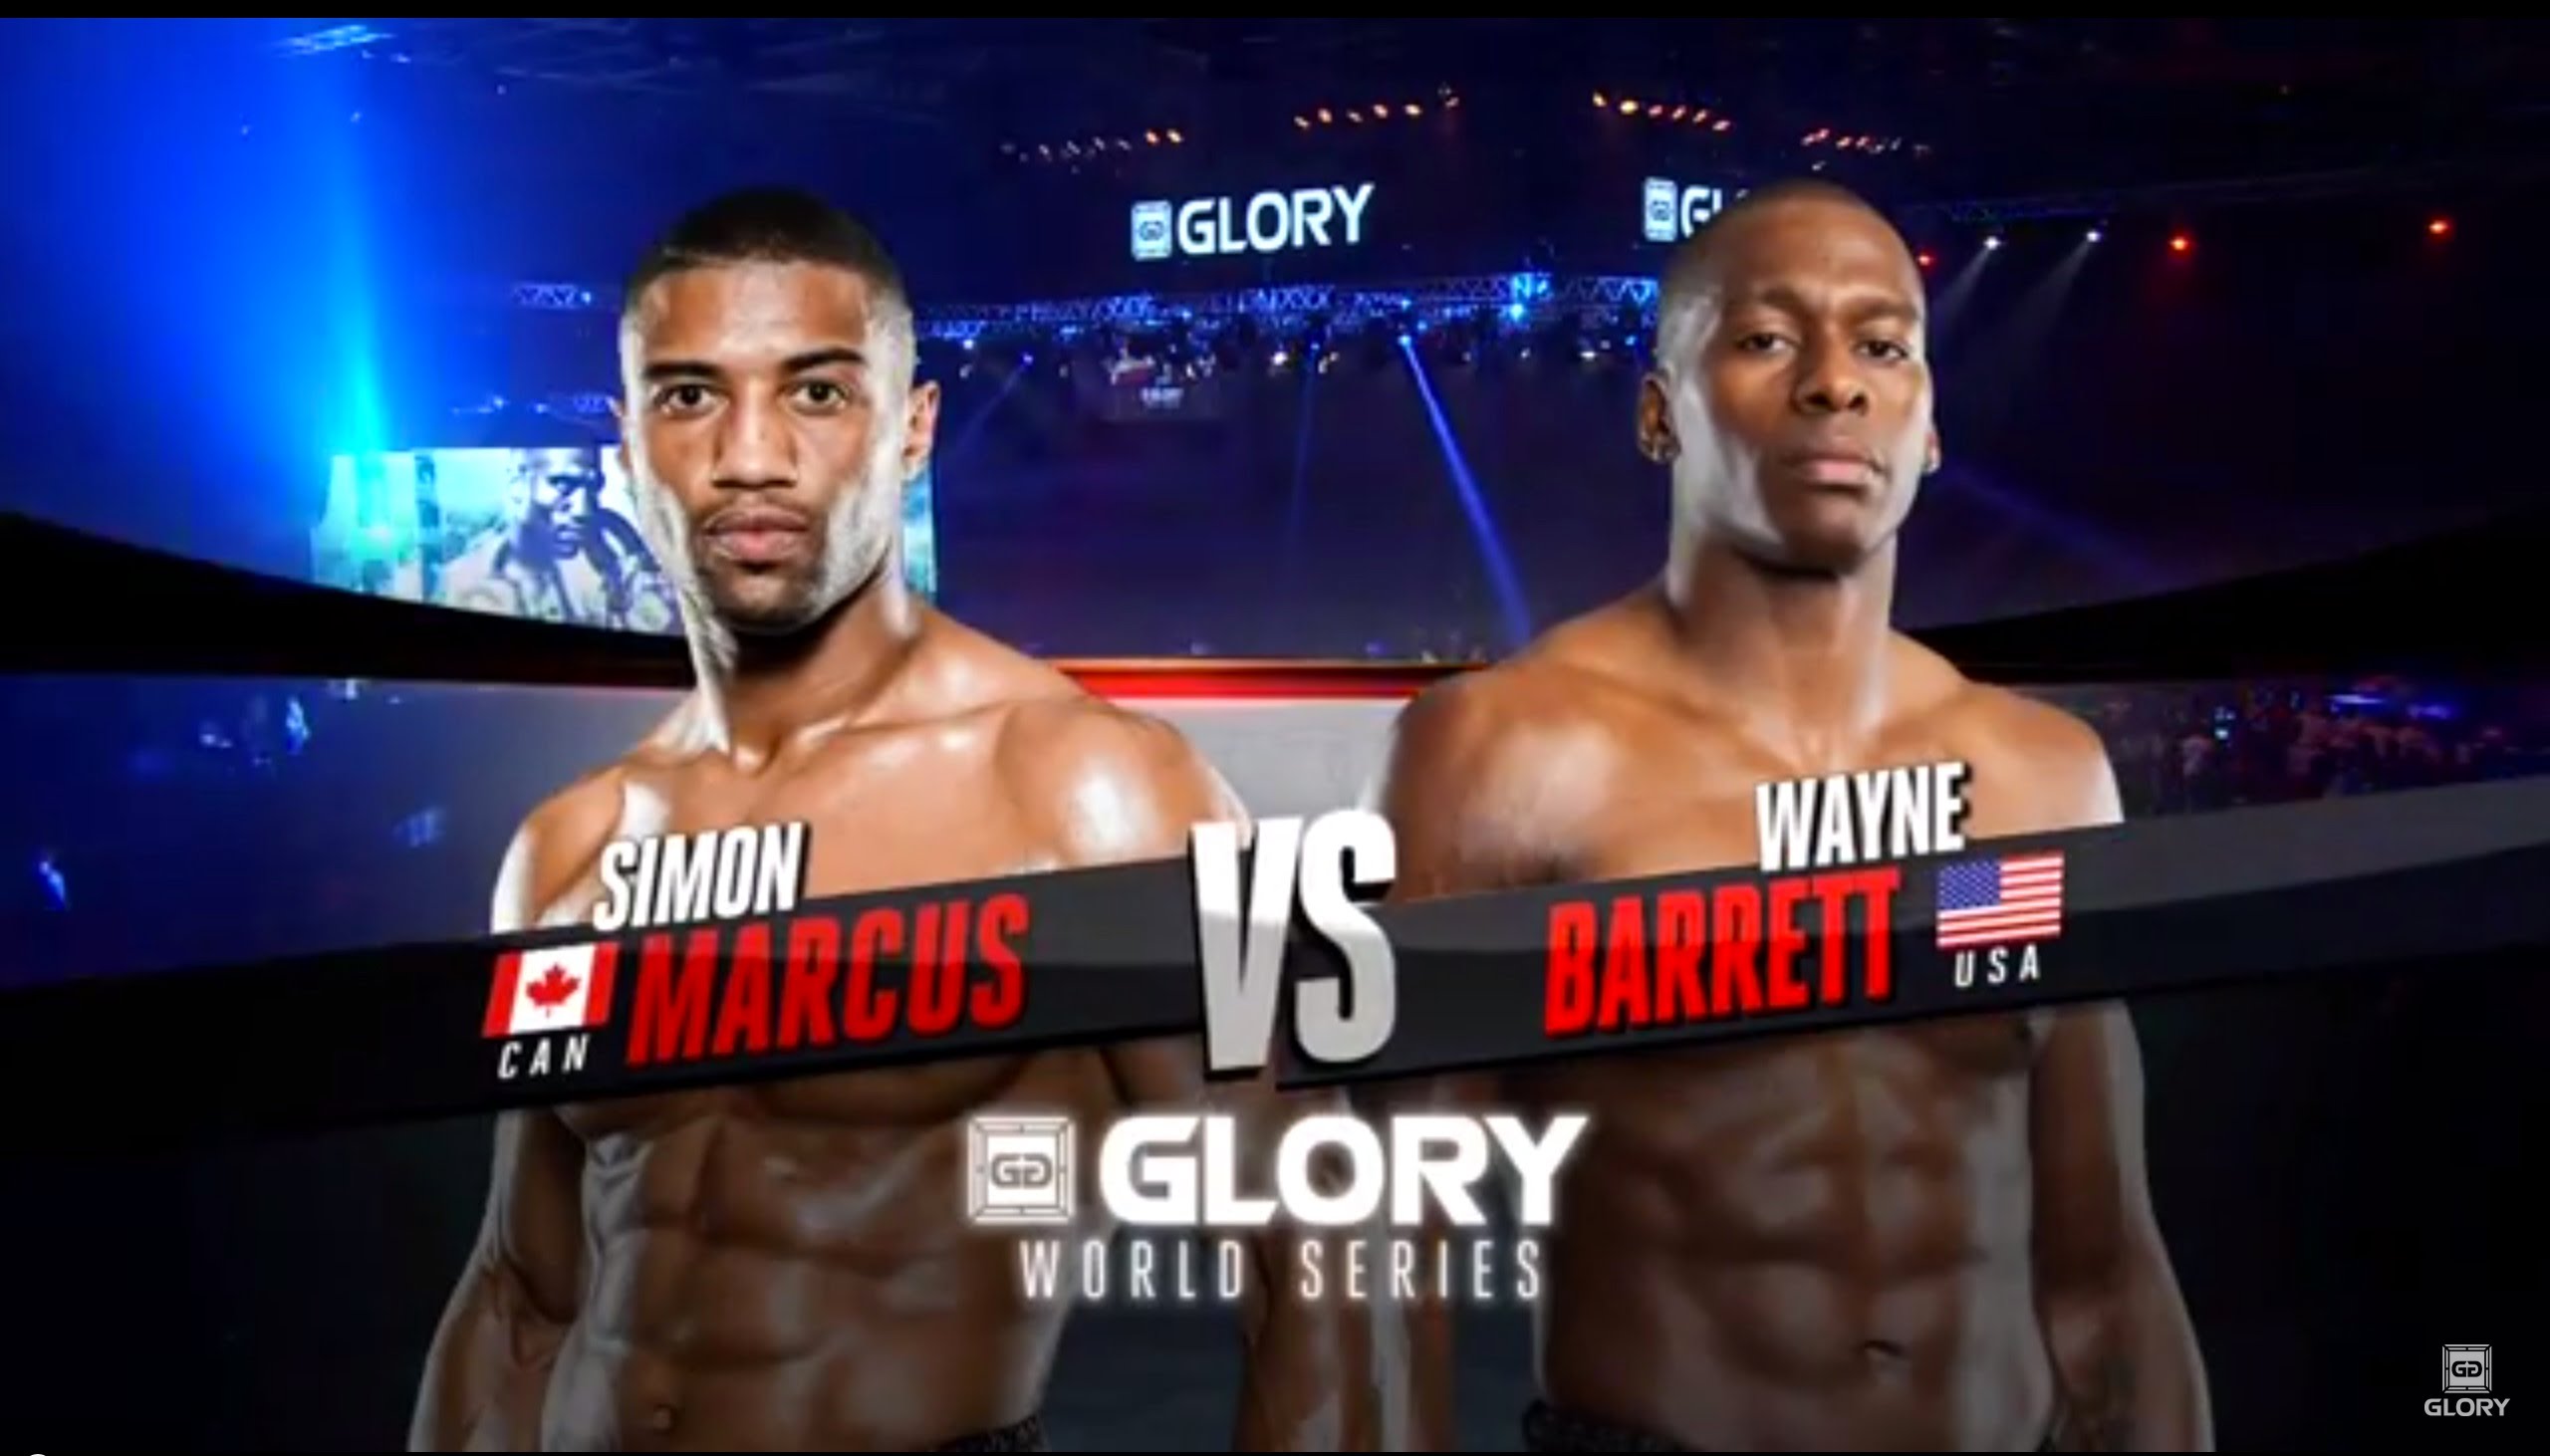 GLORY 20: Simon Marcus vs Wayne Barrett (Full Video) Full Fight MMA...